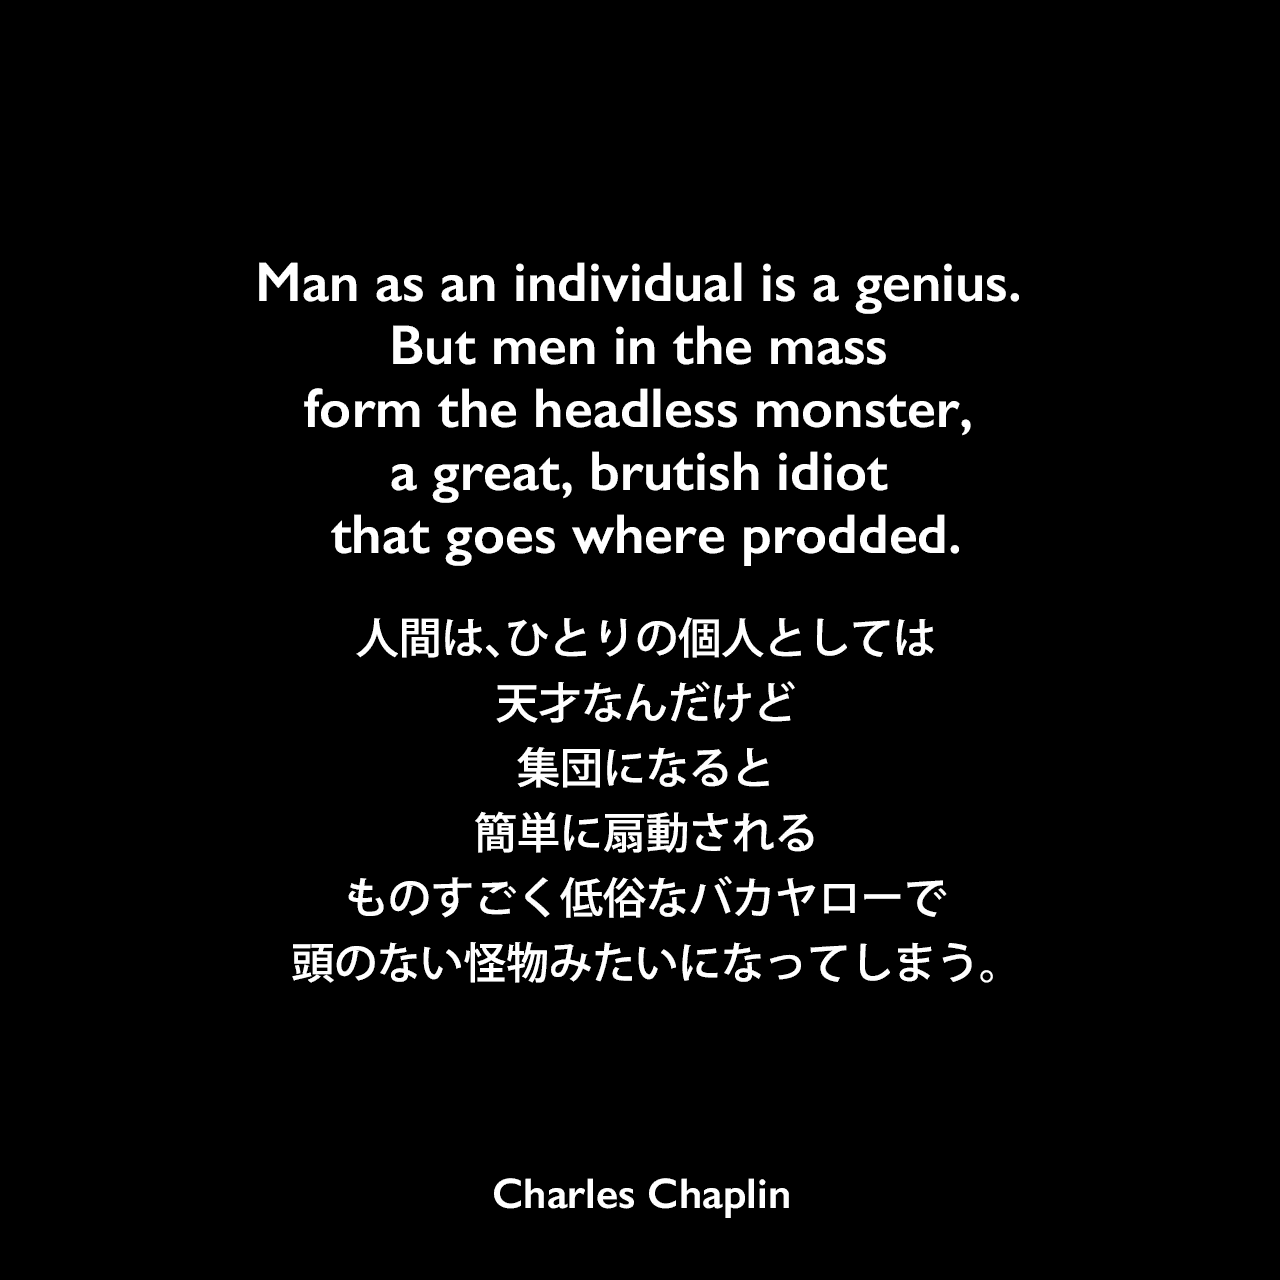 Man as an individual is a genius. But men in the mass form the headless monster, a great, brutish idiot that goes where prodded.人間は、ひとりの個人としては天才なんだけど、集団になると簡単に扇動されるものすごく低俗なバカヤローで、頭のない怪物みたいになってしまう。Charles Chaplin